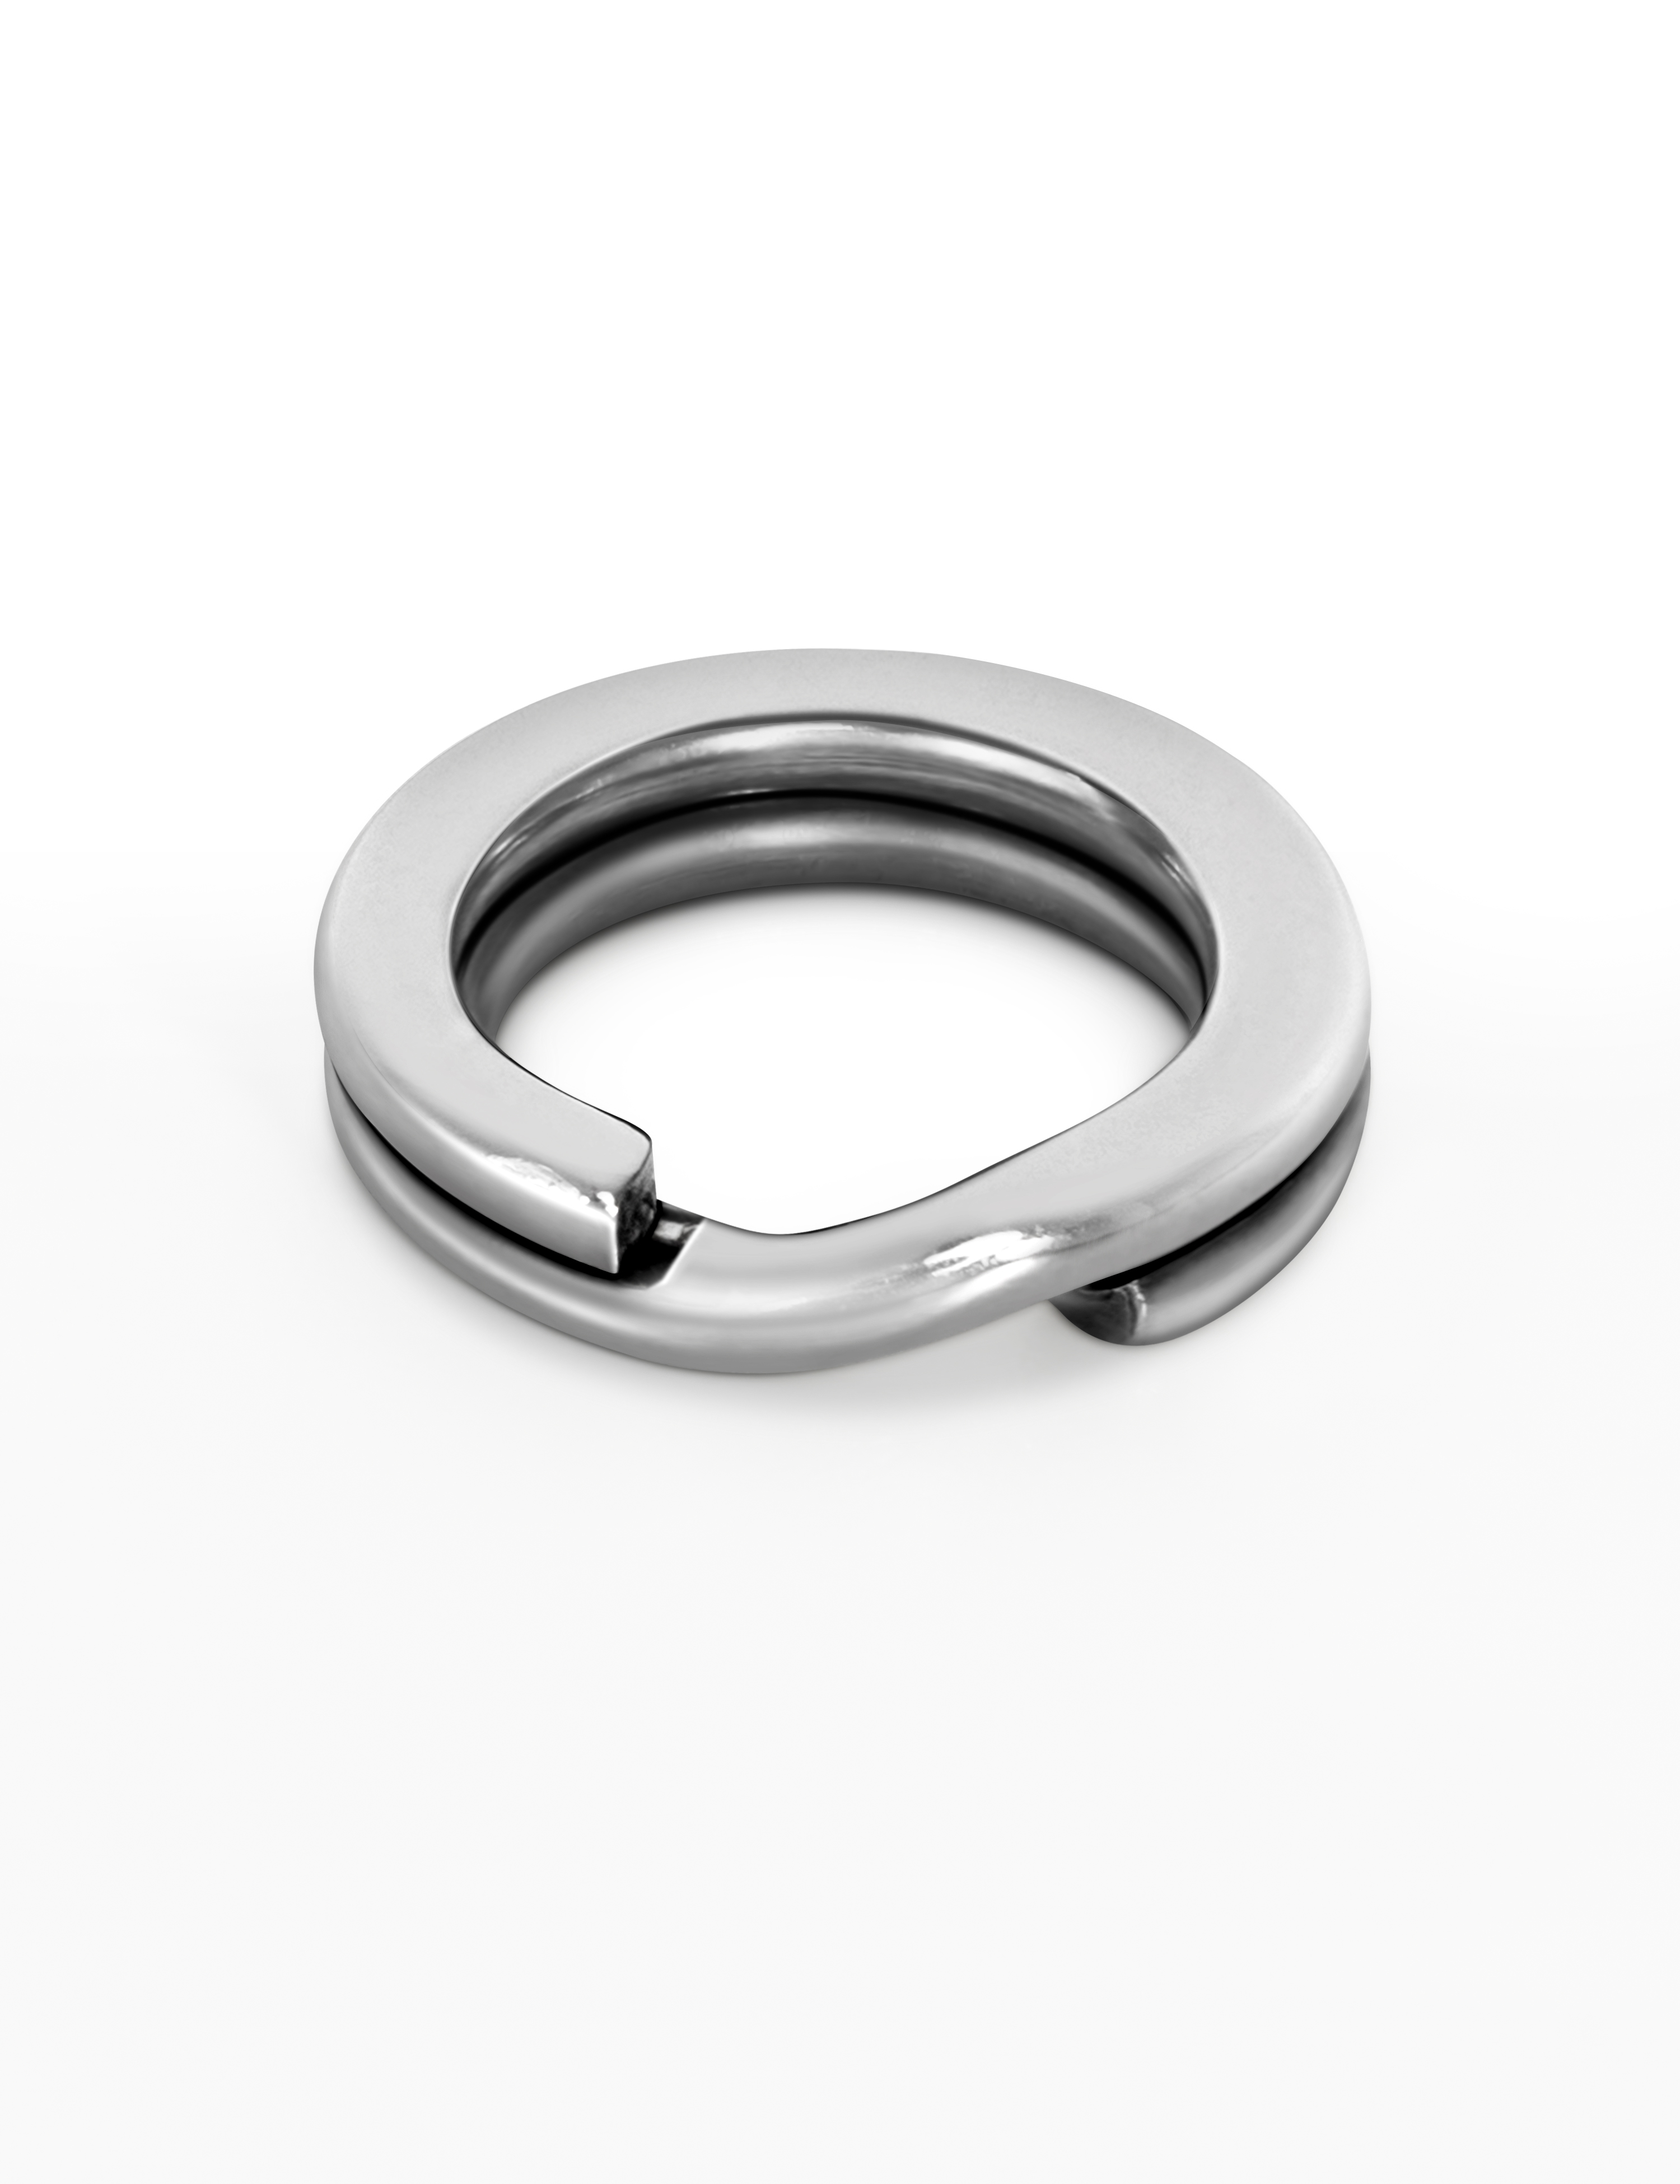 BLUEWING Stainless Steel Split Ring